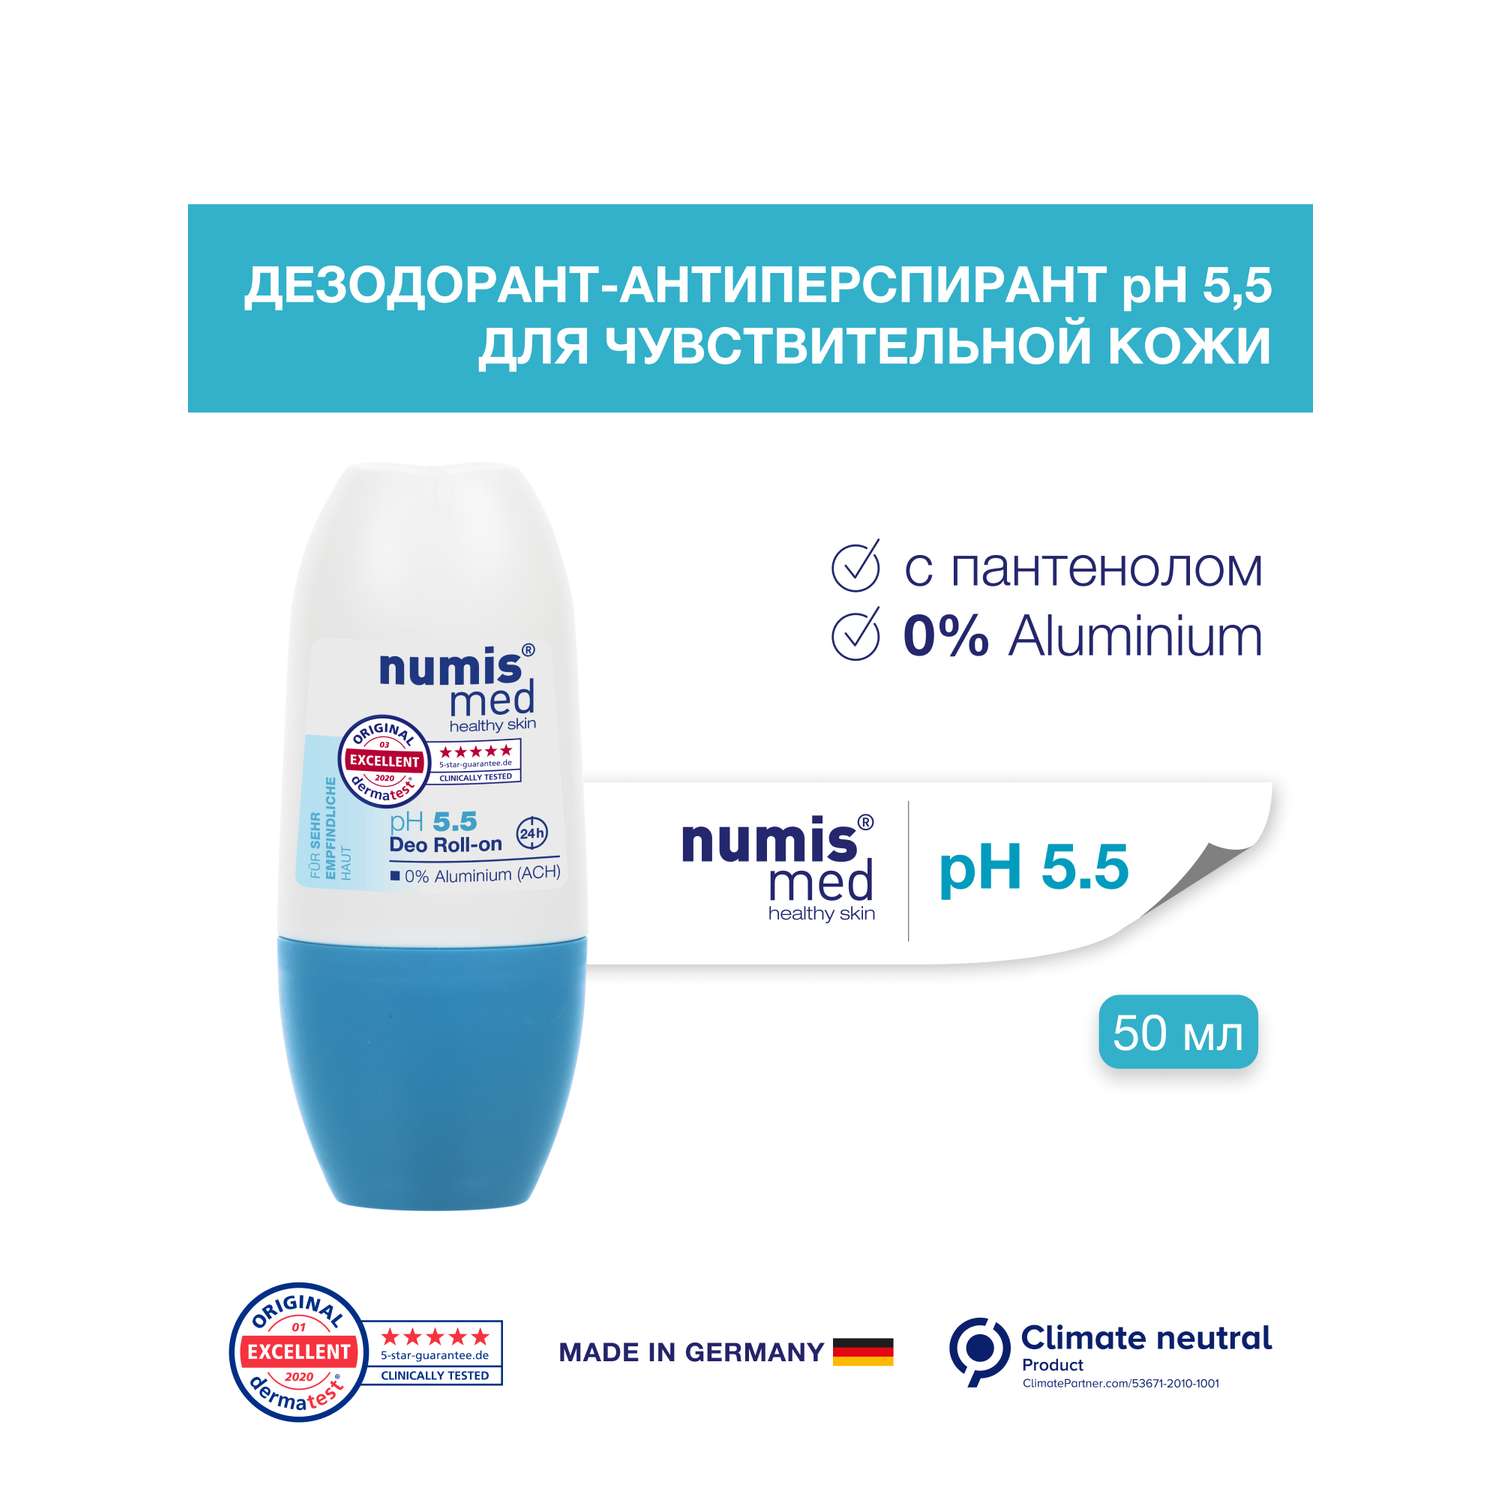 Дезодорант-антиперспирант numis® med с пантенолом 0% Aluminium ACH - фото 2